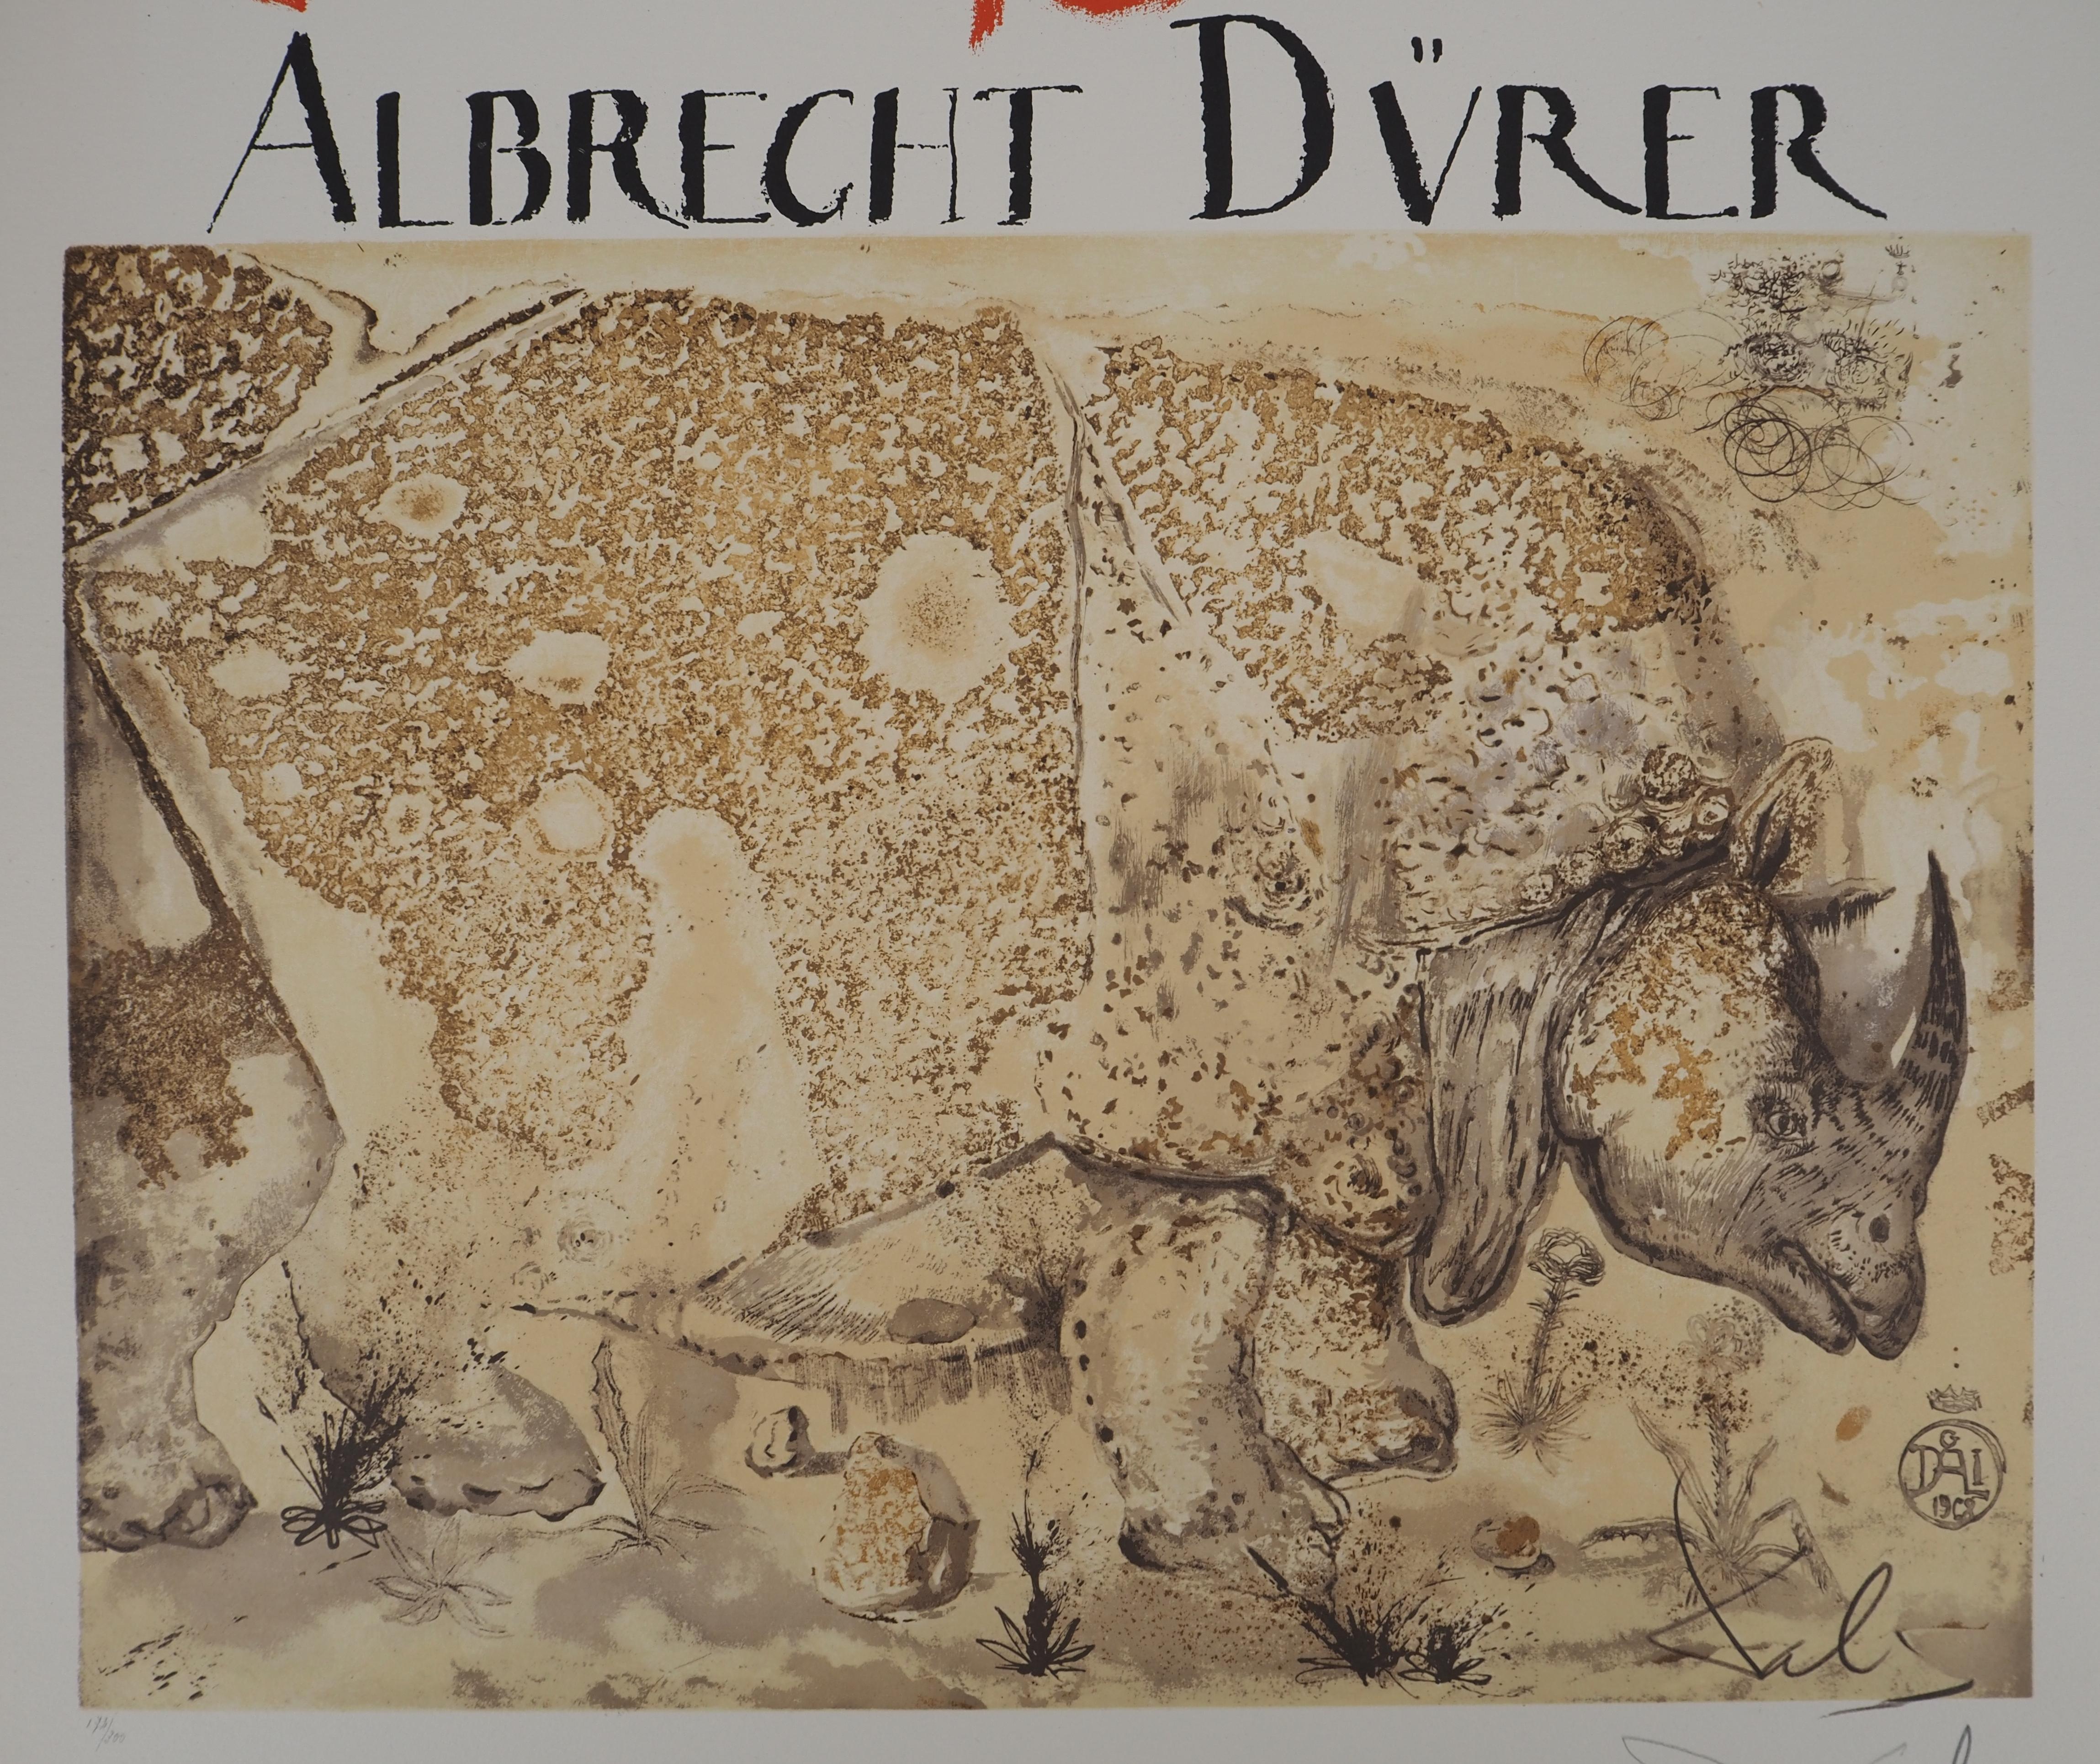 Rhinoceros, Tribute to Albrecht DURER – signiertes Lithographieplakat (Gaspar #1503) (Surrealismus), Print, von Salvador Dalí